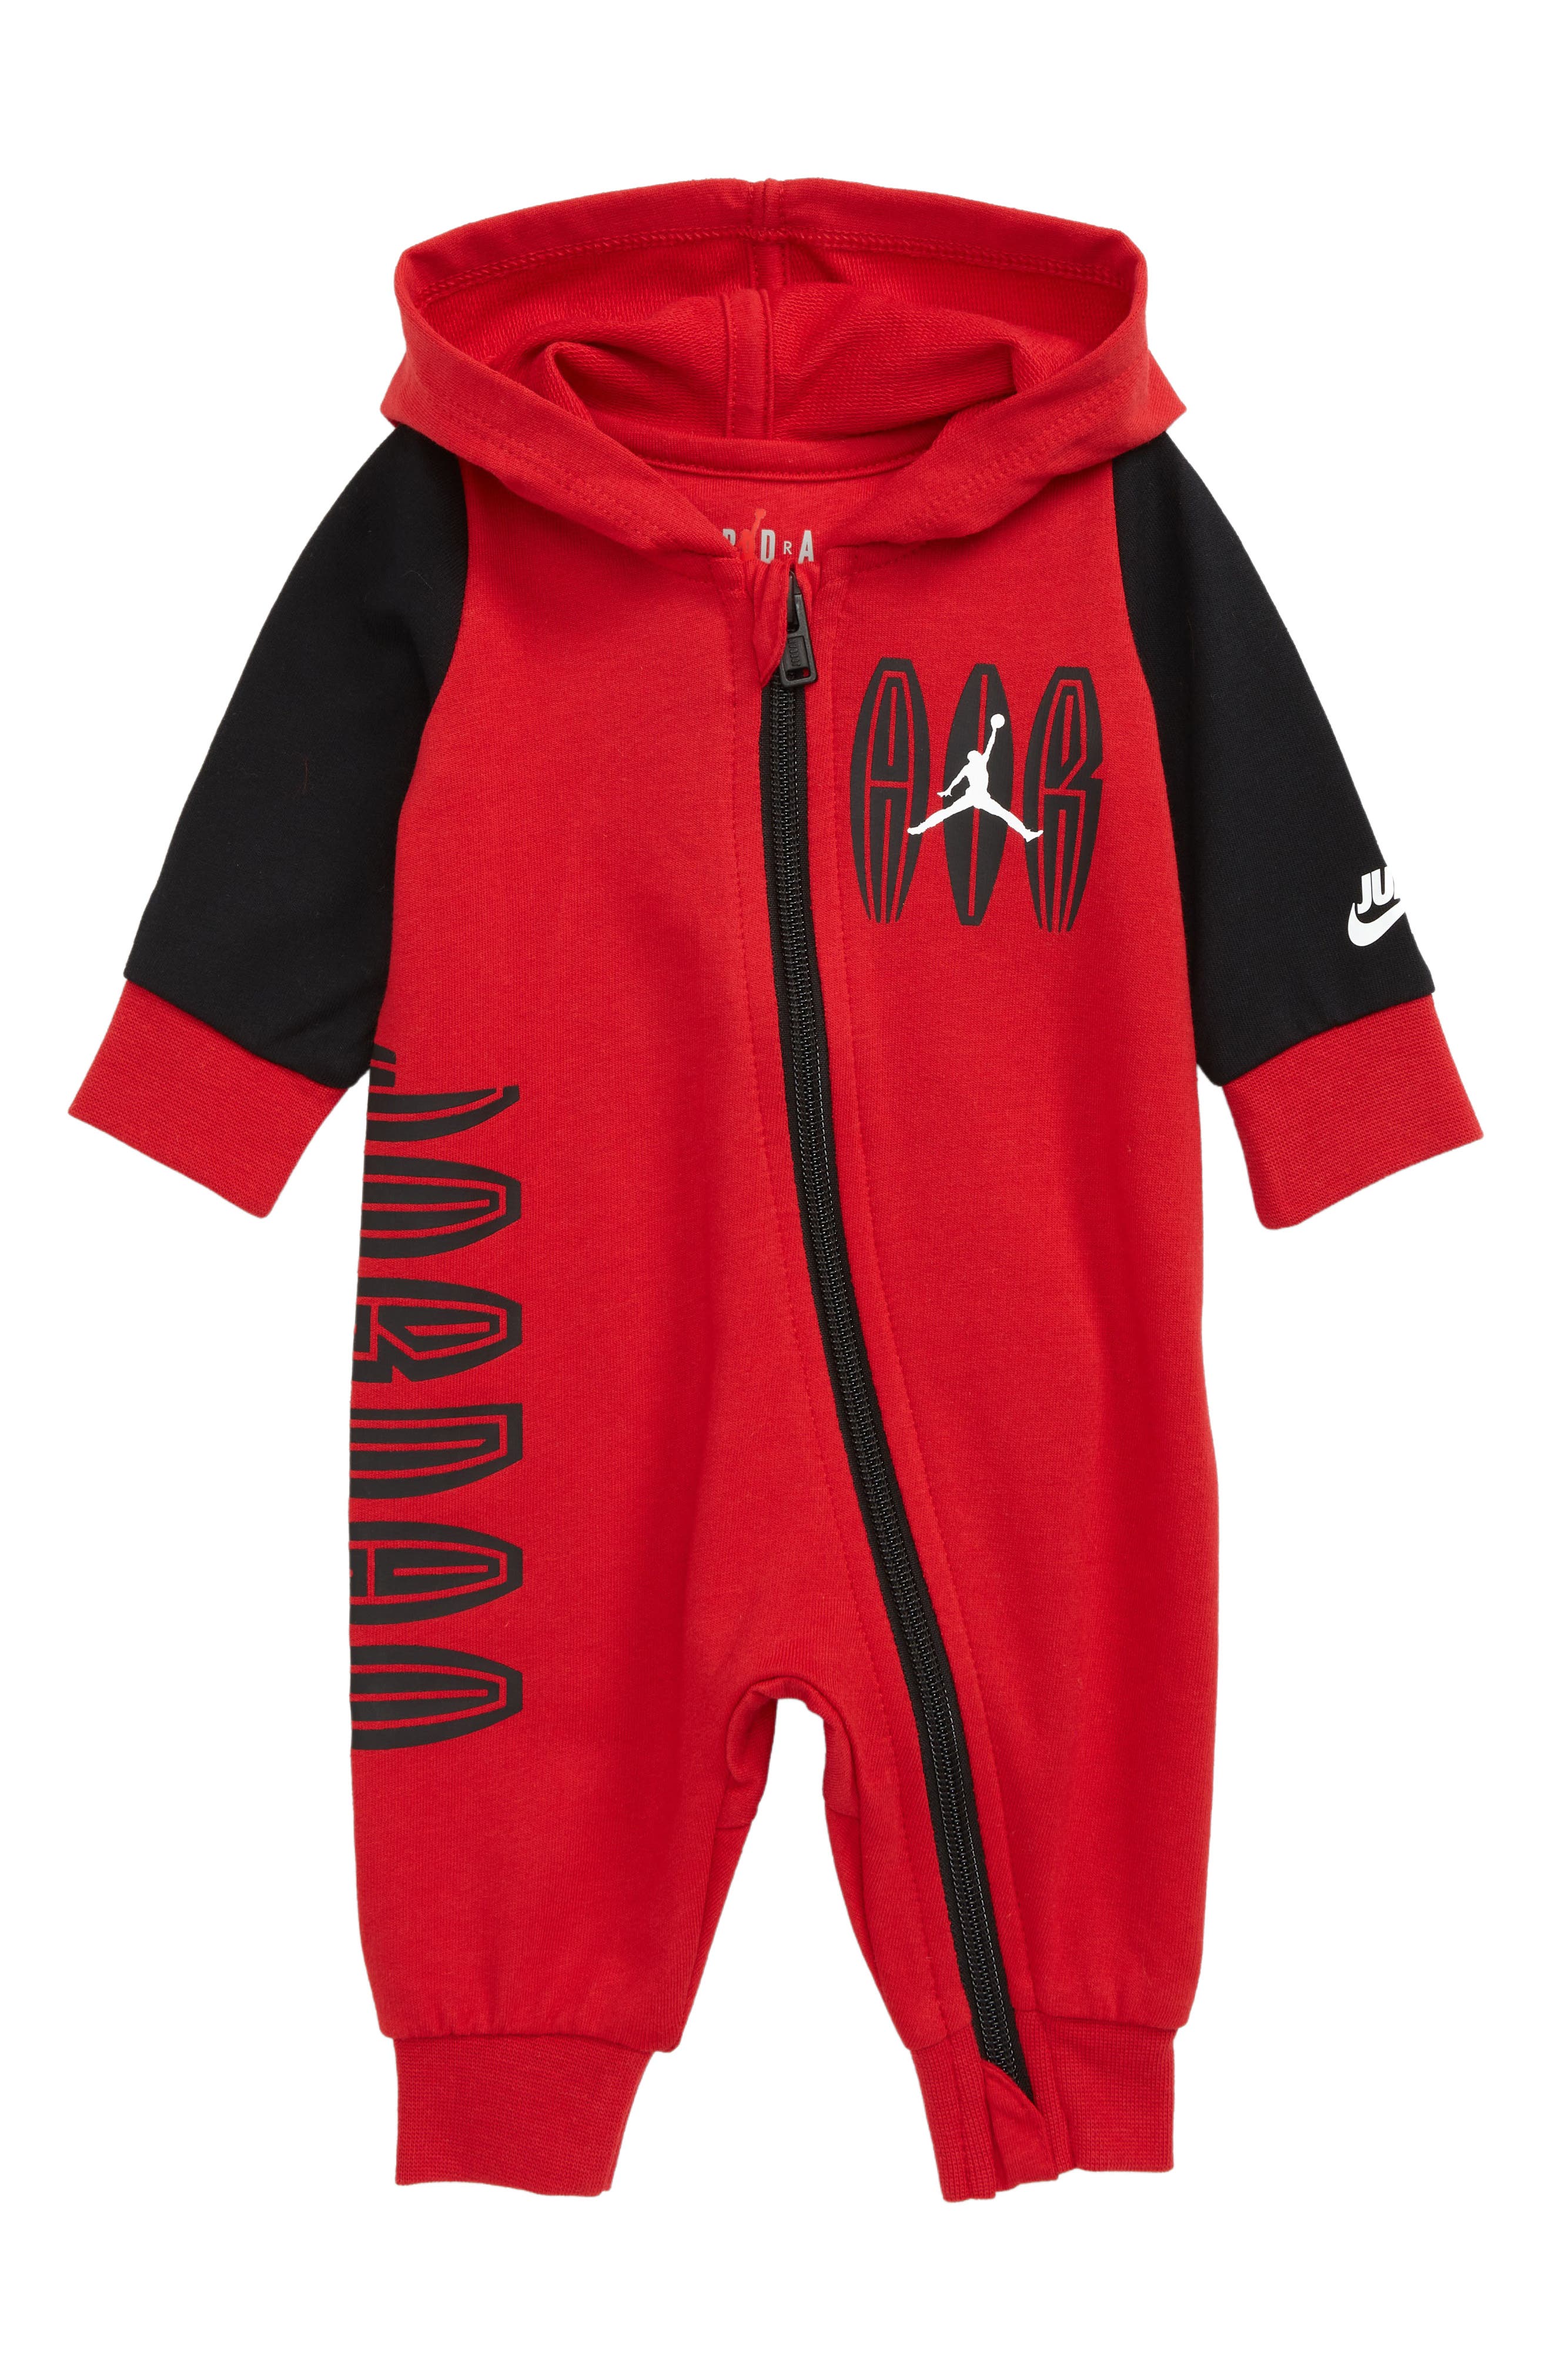 All Baby Boy Jordan Clothes | Nordstrom